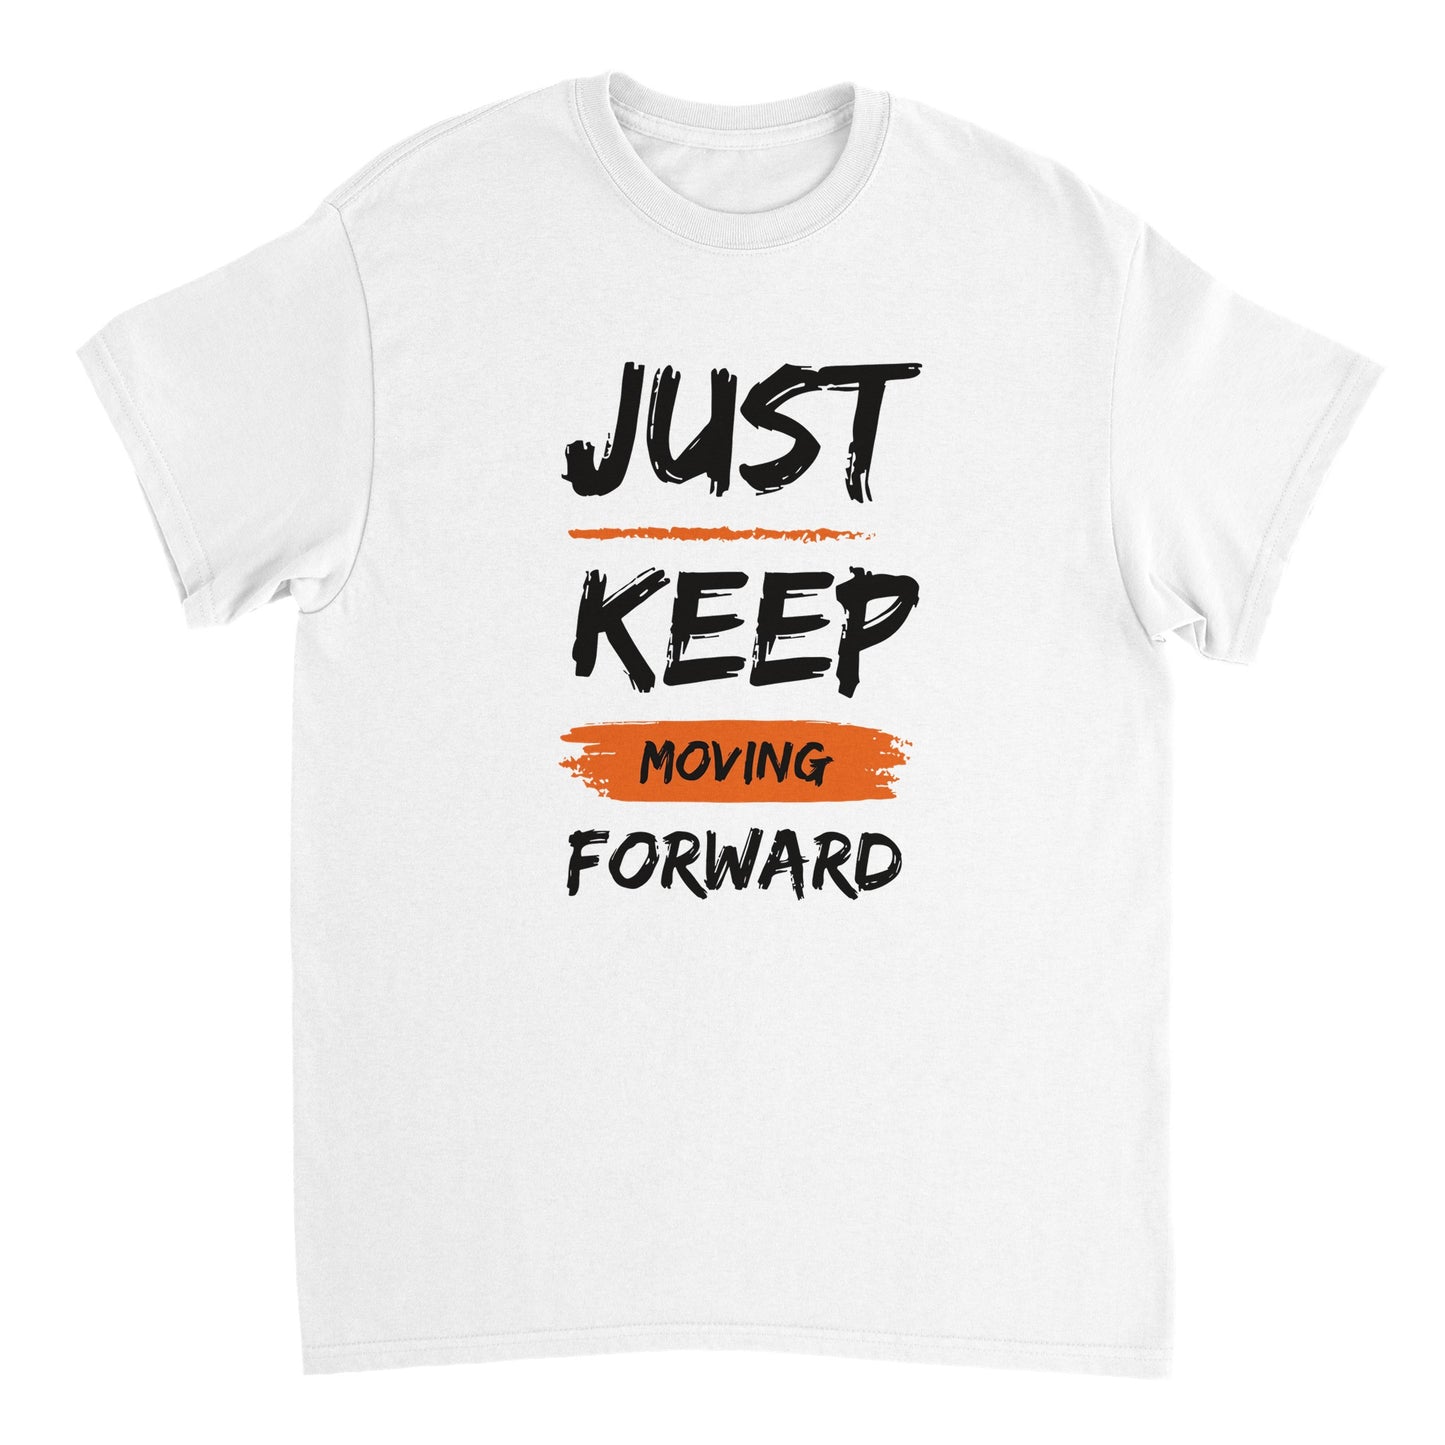 Just Keep Moving Forward - Heavyweight Unisex Crewneck T-shirt